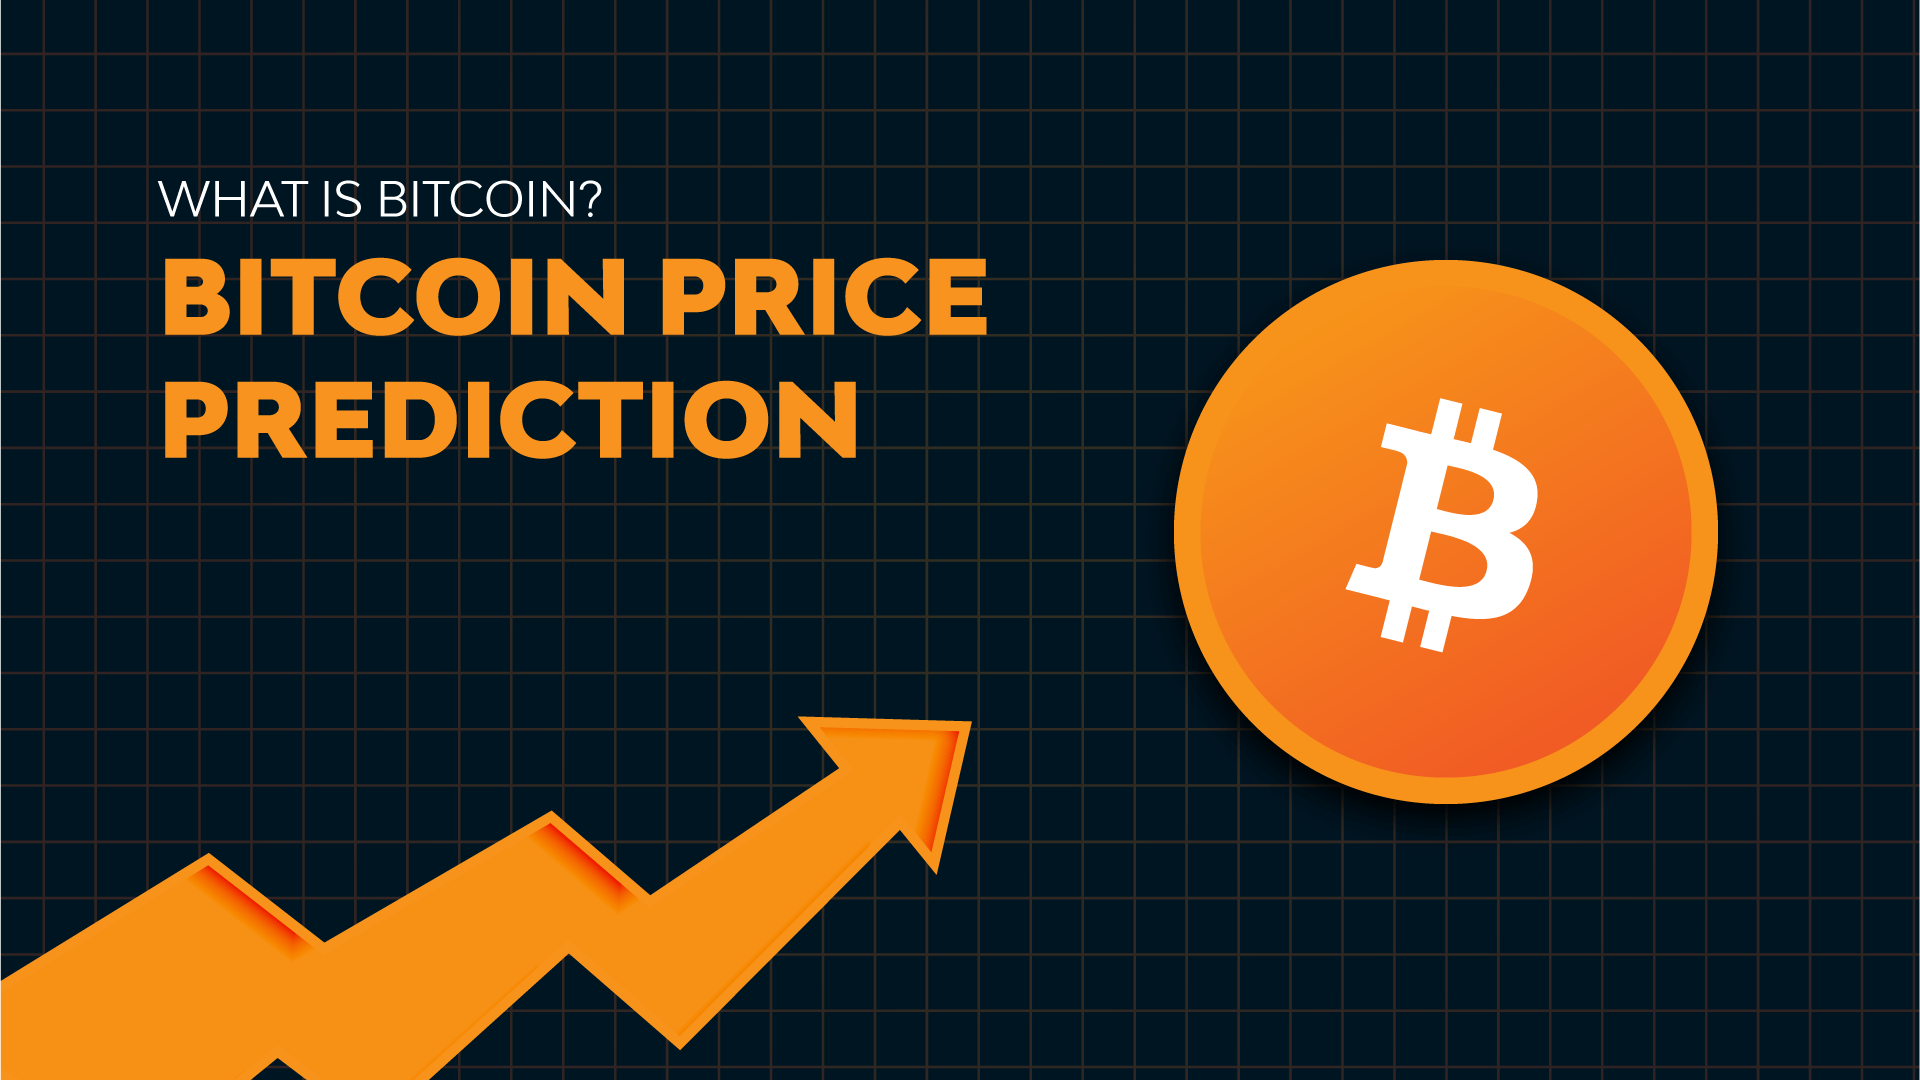 BITCOIN PRICE PREDICTION 2022: Will Bitcoin Reach $100,000?